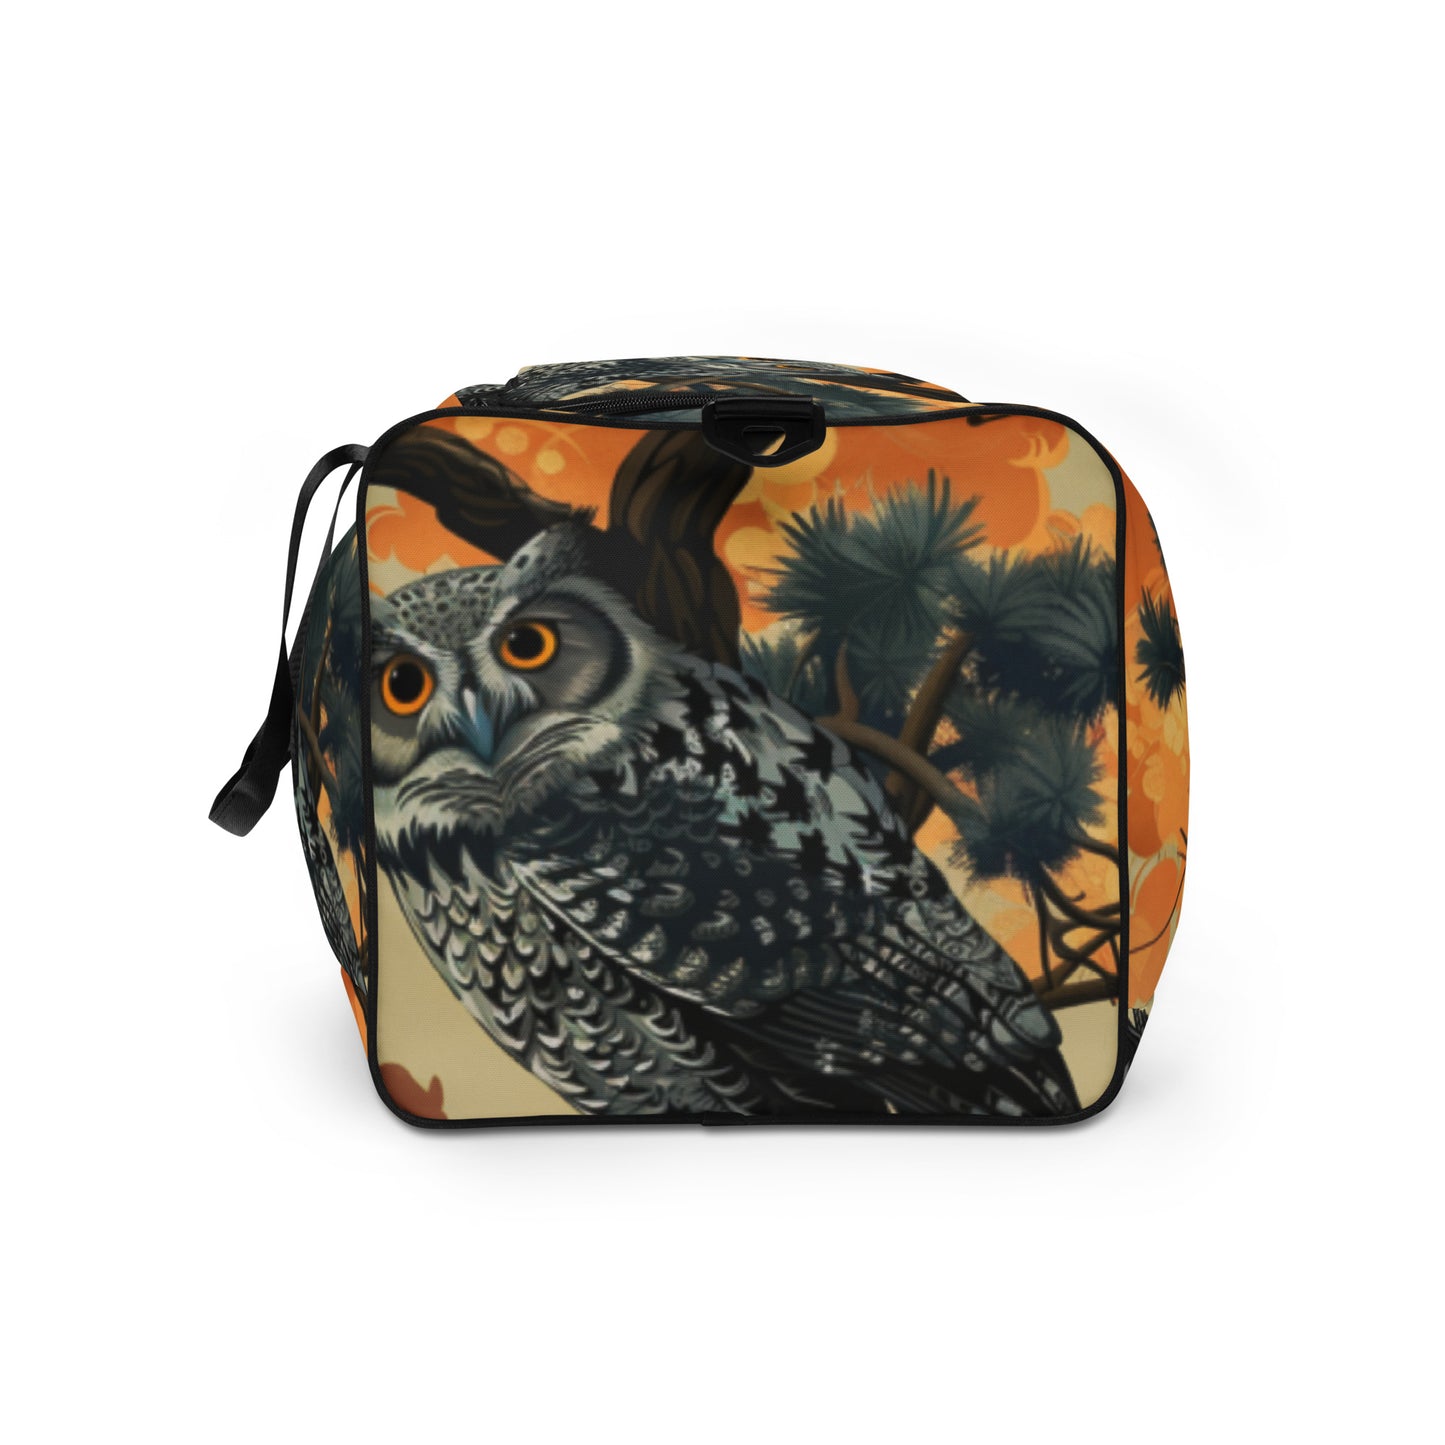 Owl 2 Duffle bag